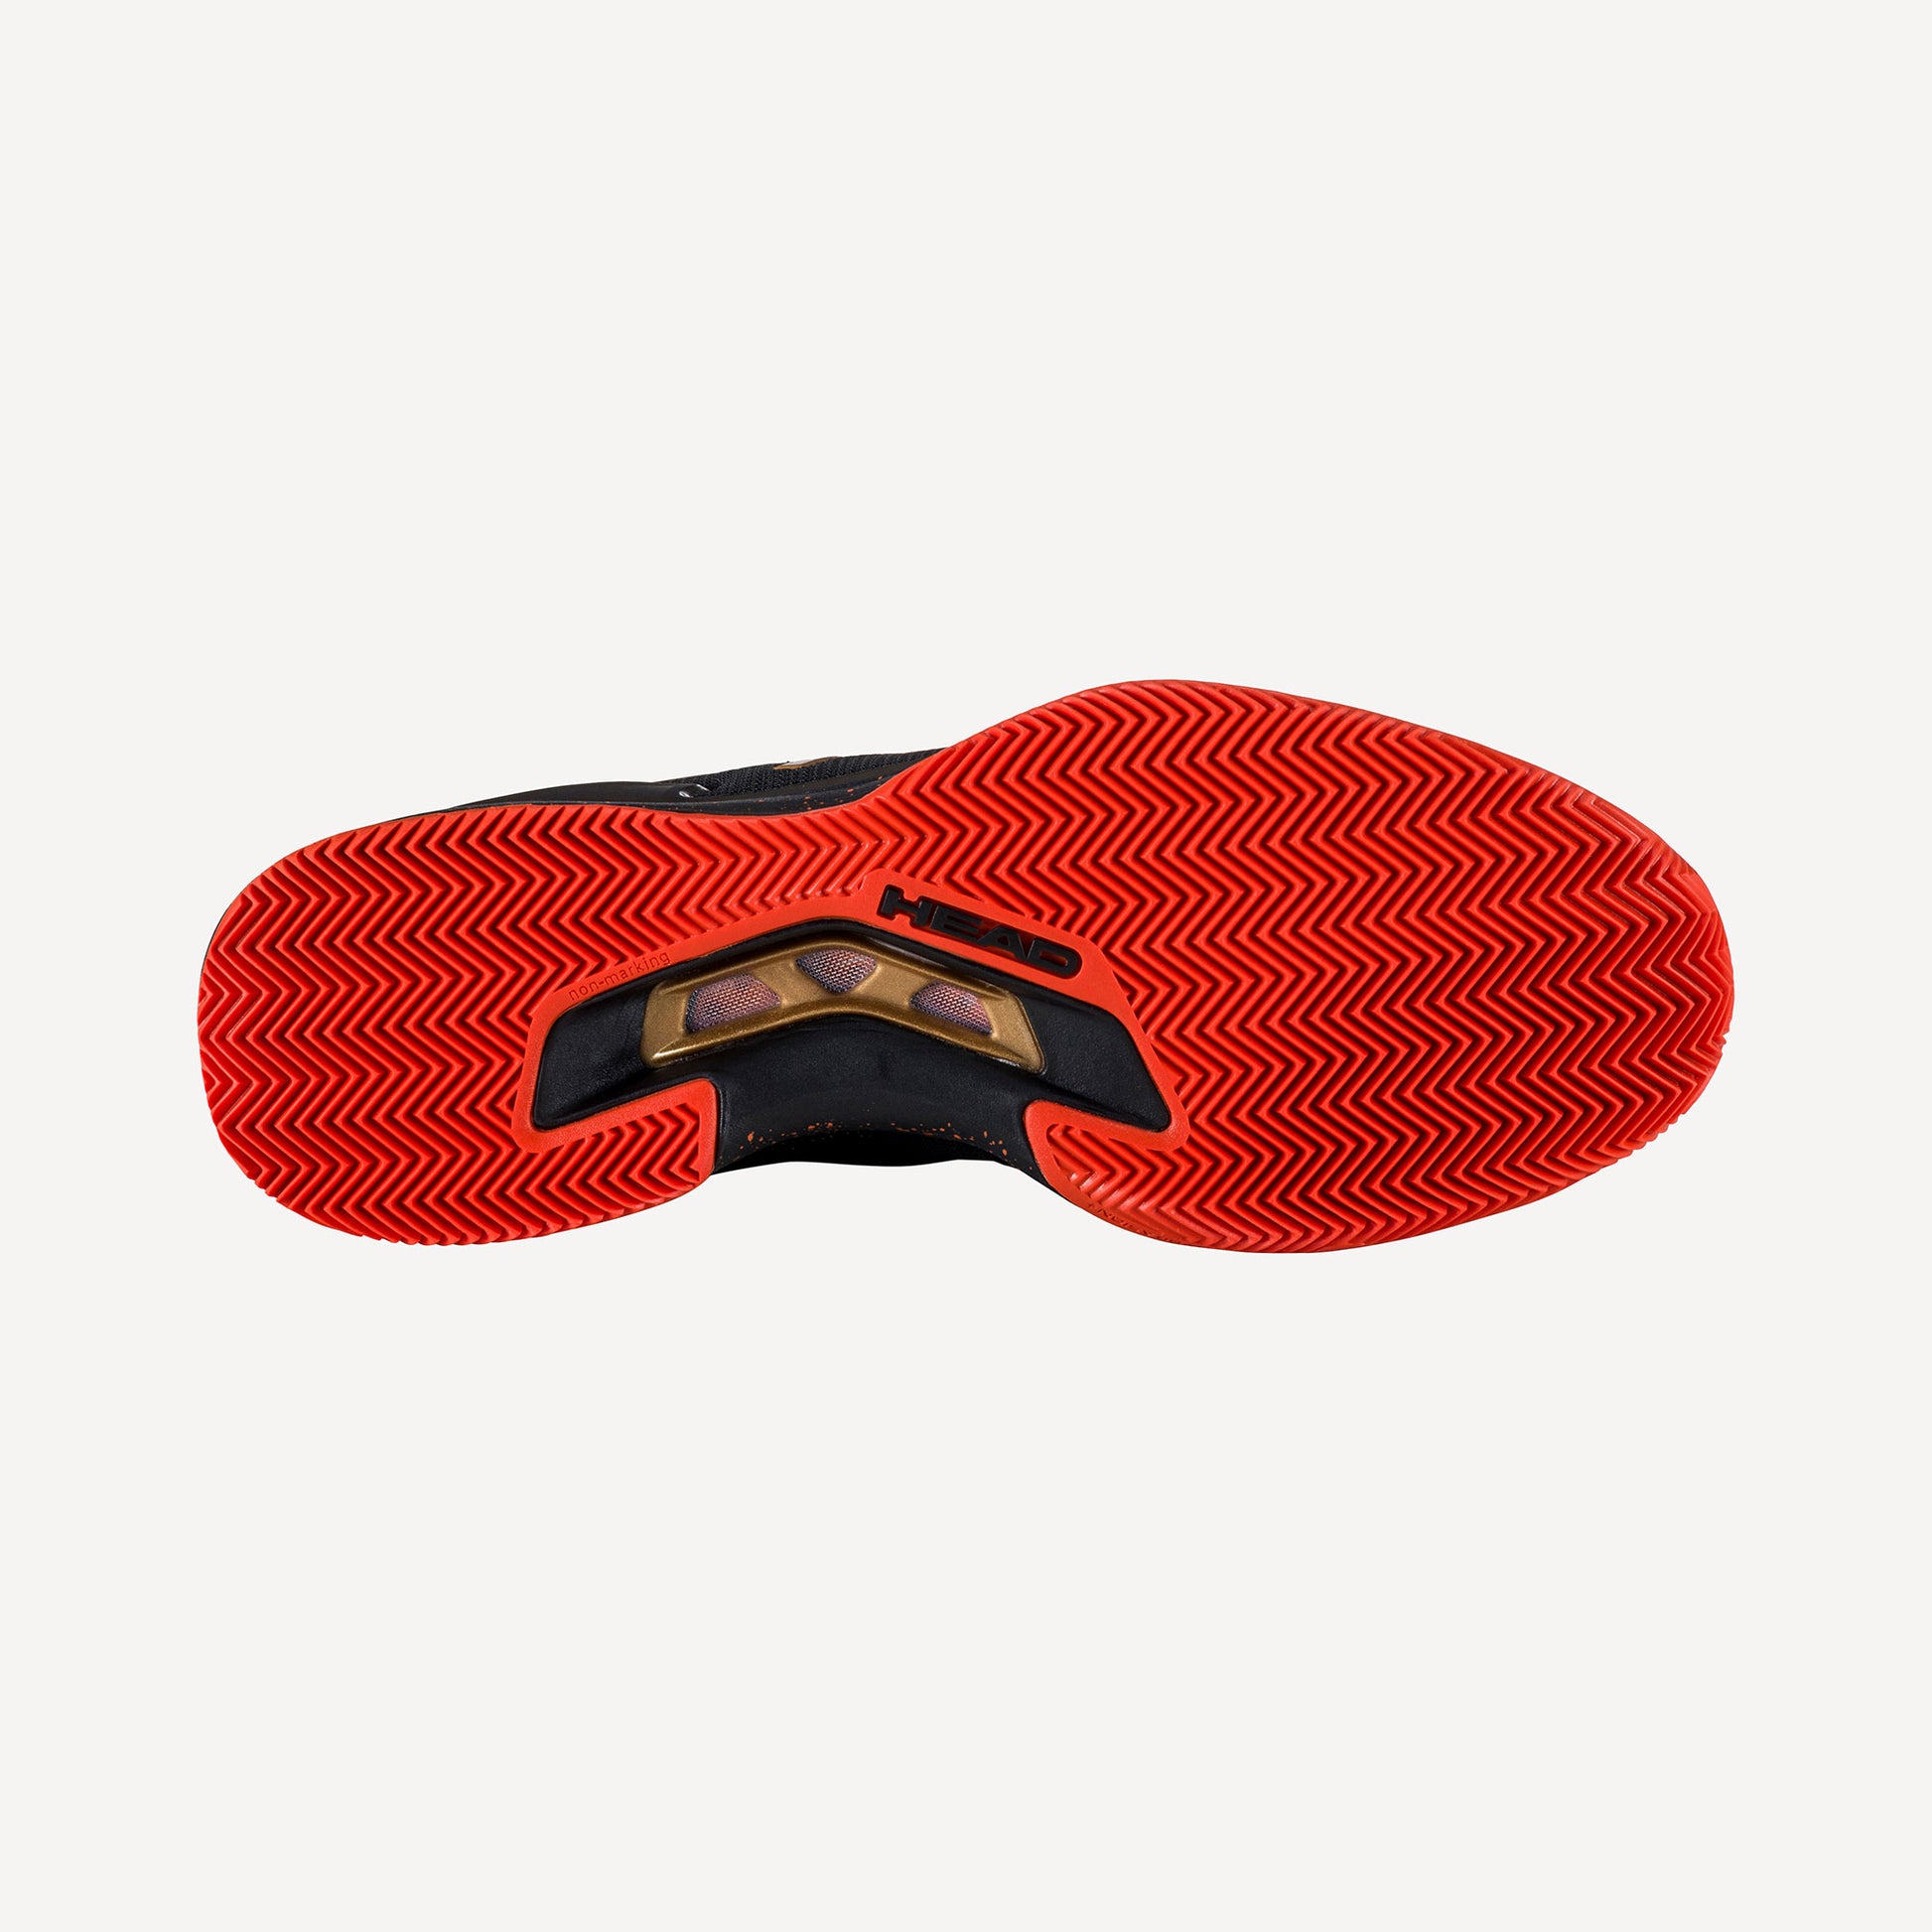 HEAD Sprint Pro 3.5 SF Men's Clay Court Tennis Shoes Black (2)